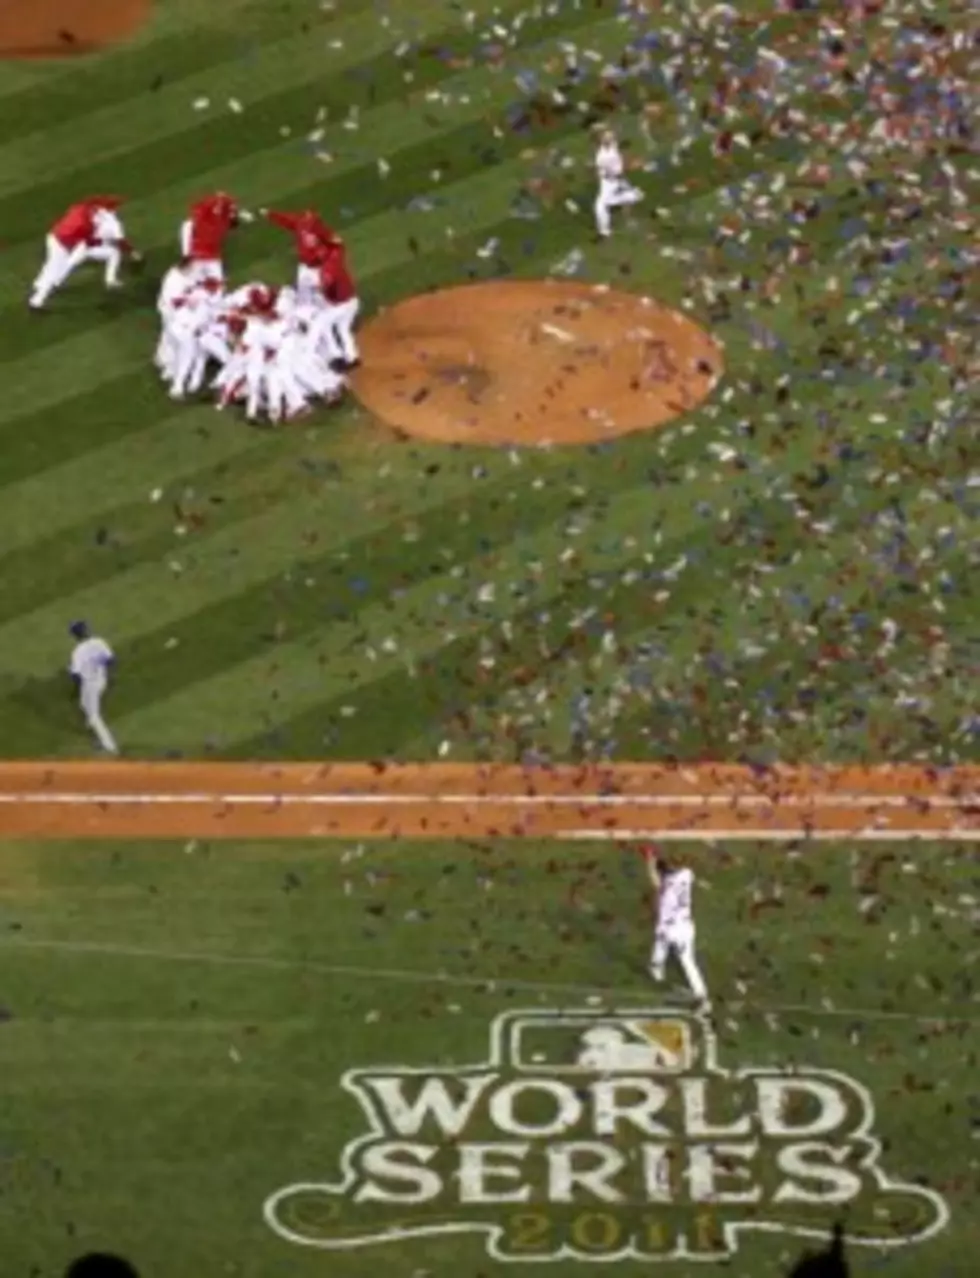 Cardinals Win World Series